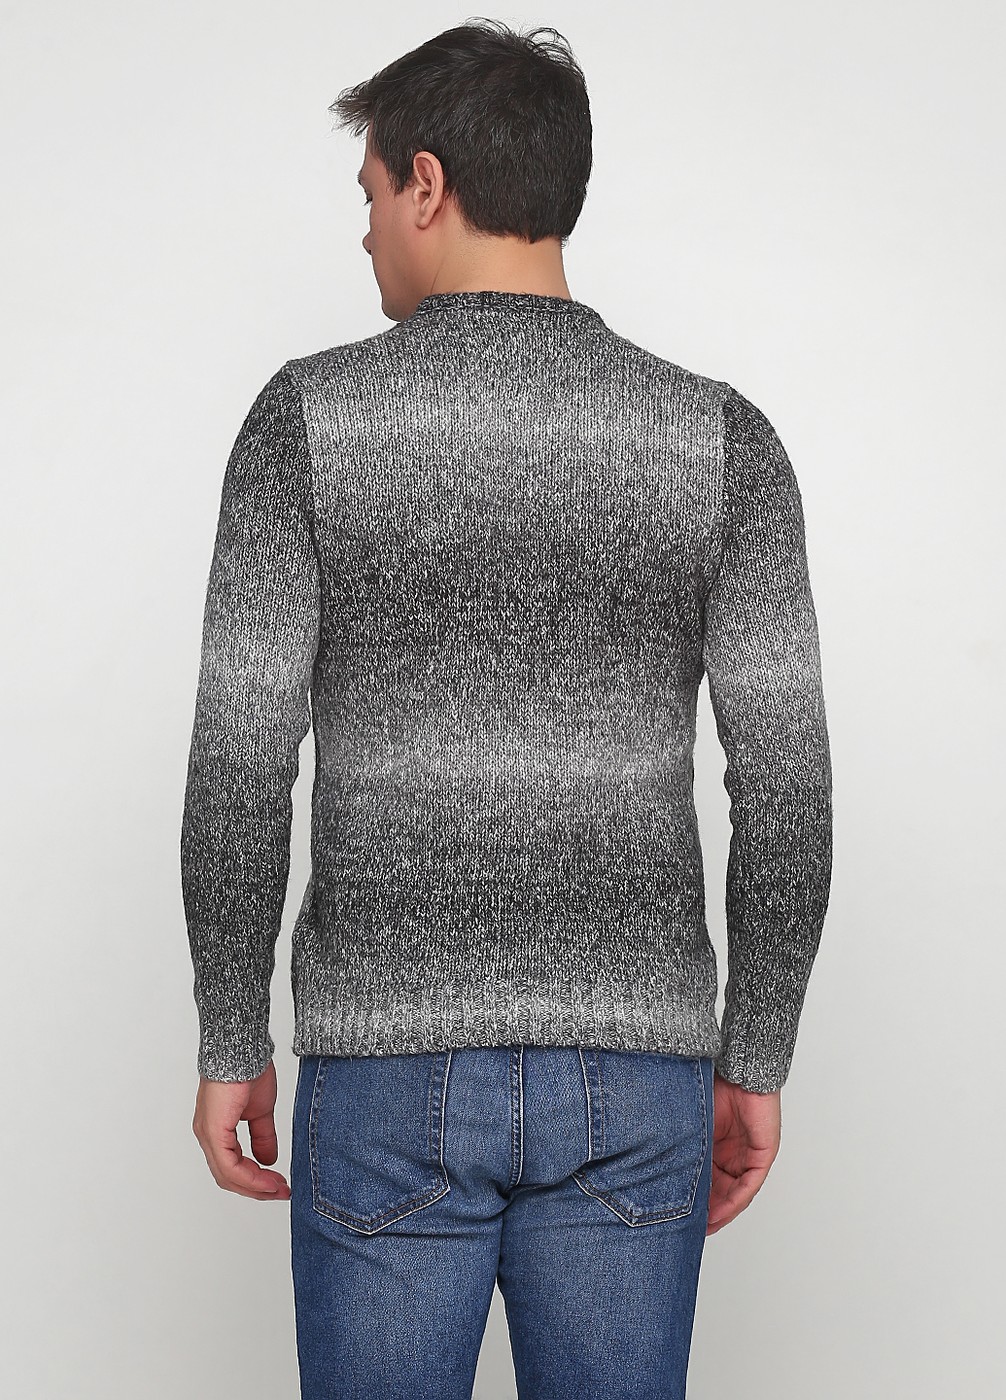 Свитер мужской - свитер Hollister